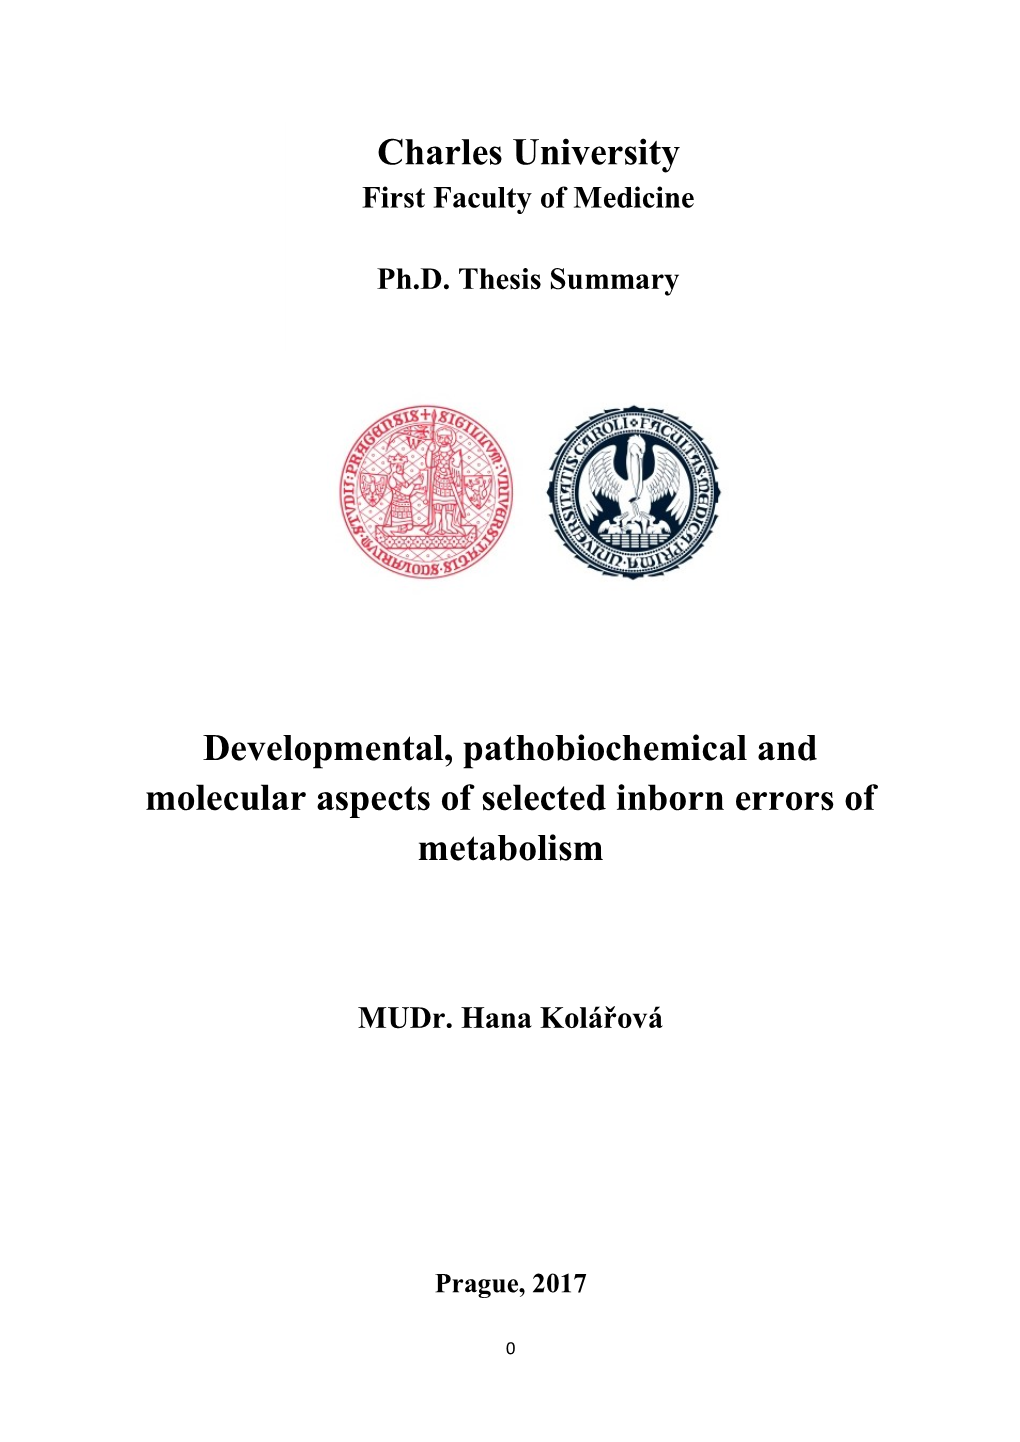 Developmental, Pathobiochemical and Molecular Aspects of Selected Inborn Errors of Metabolism